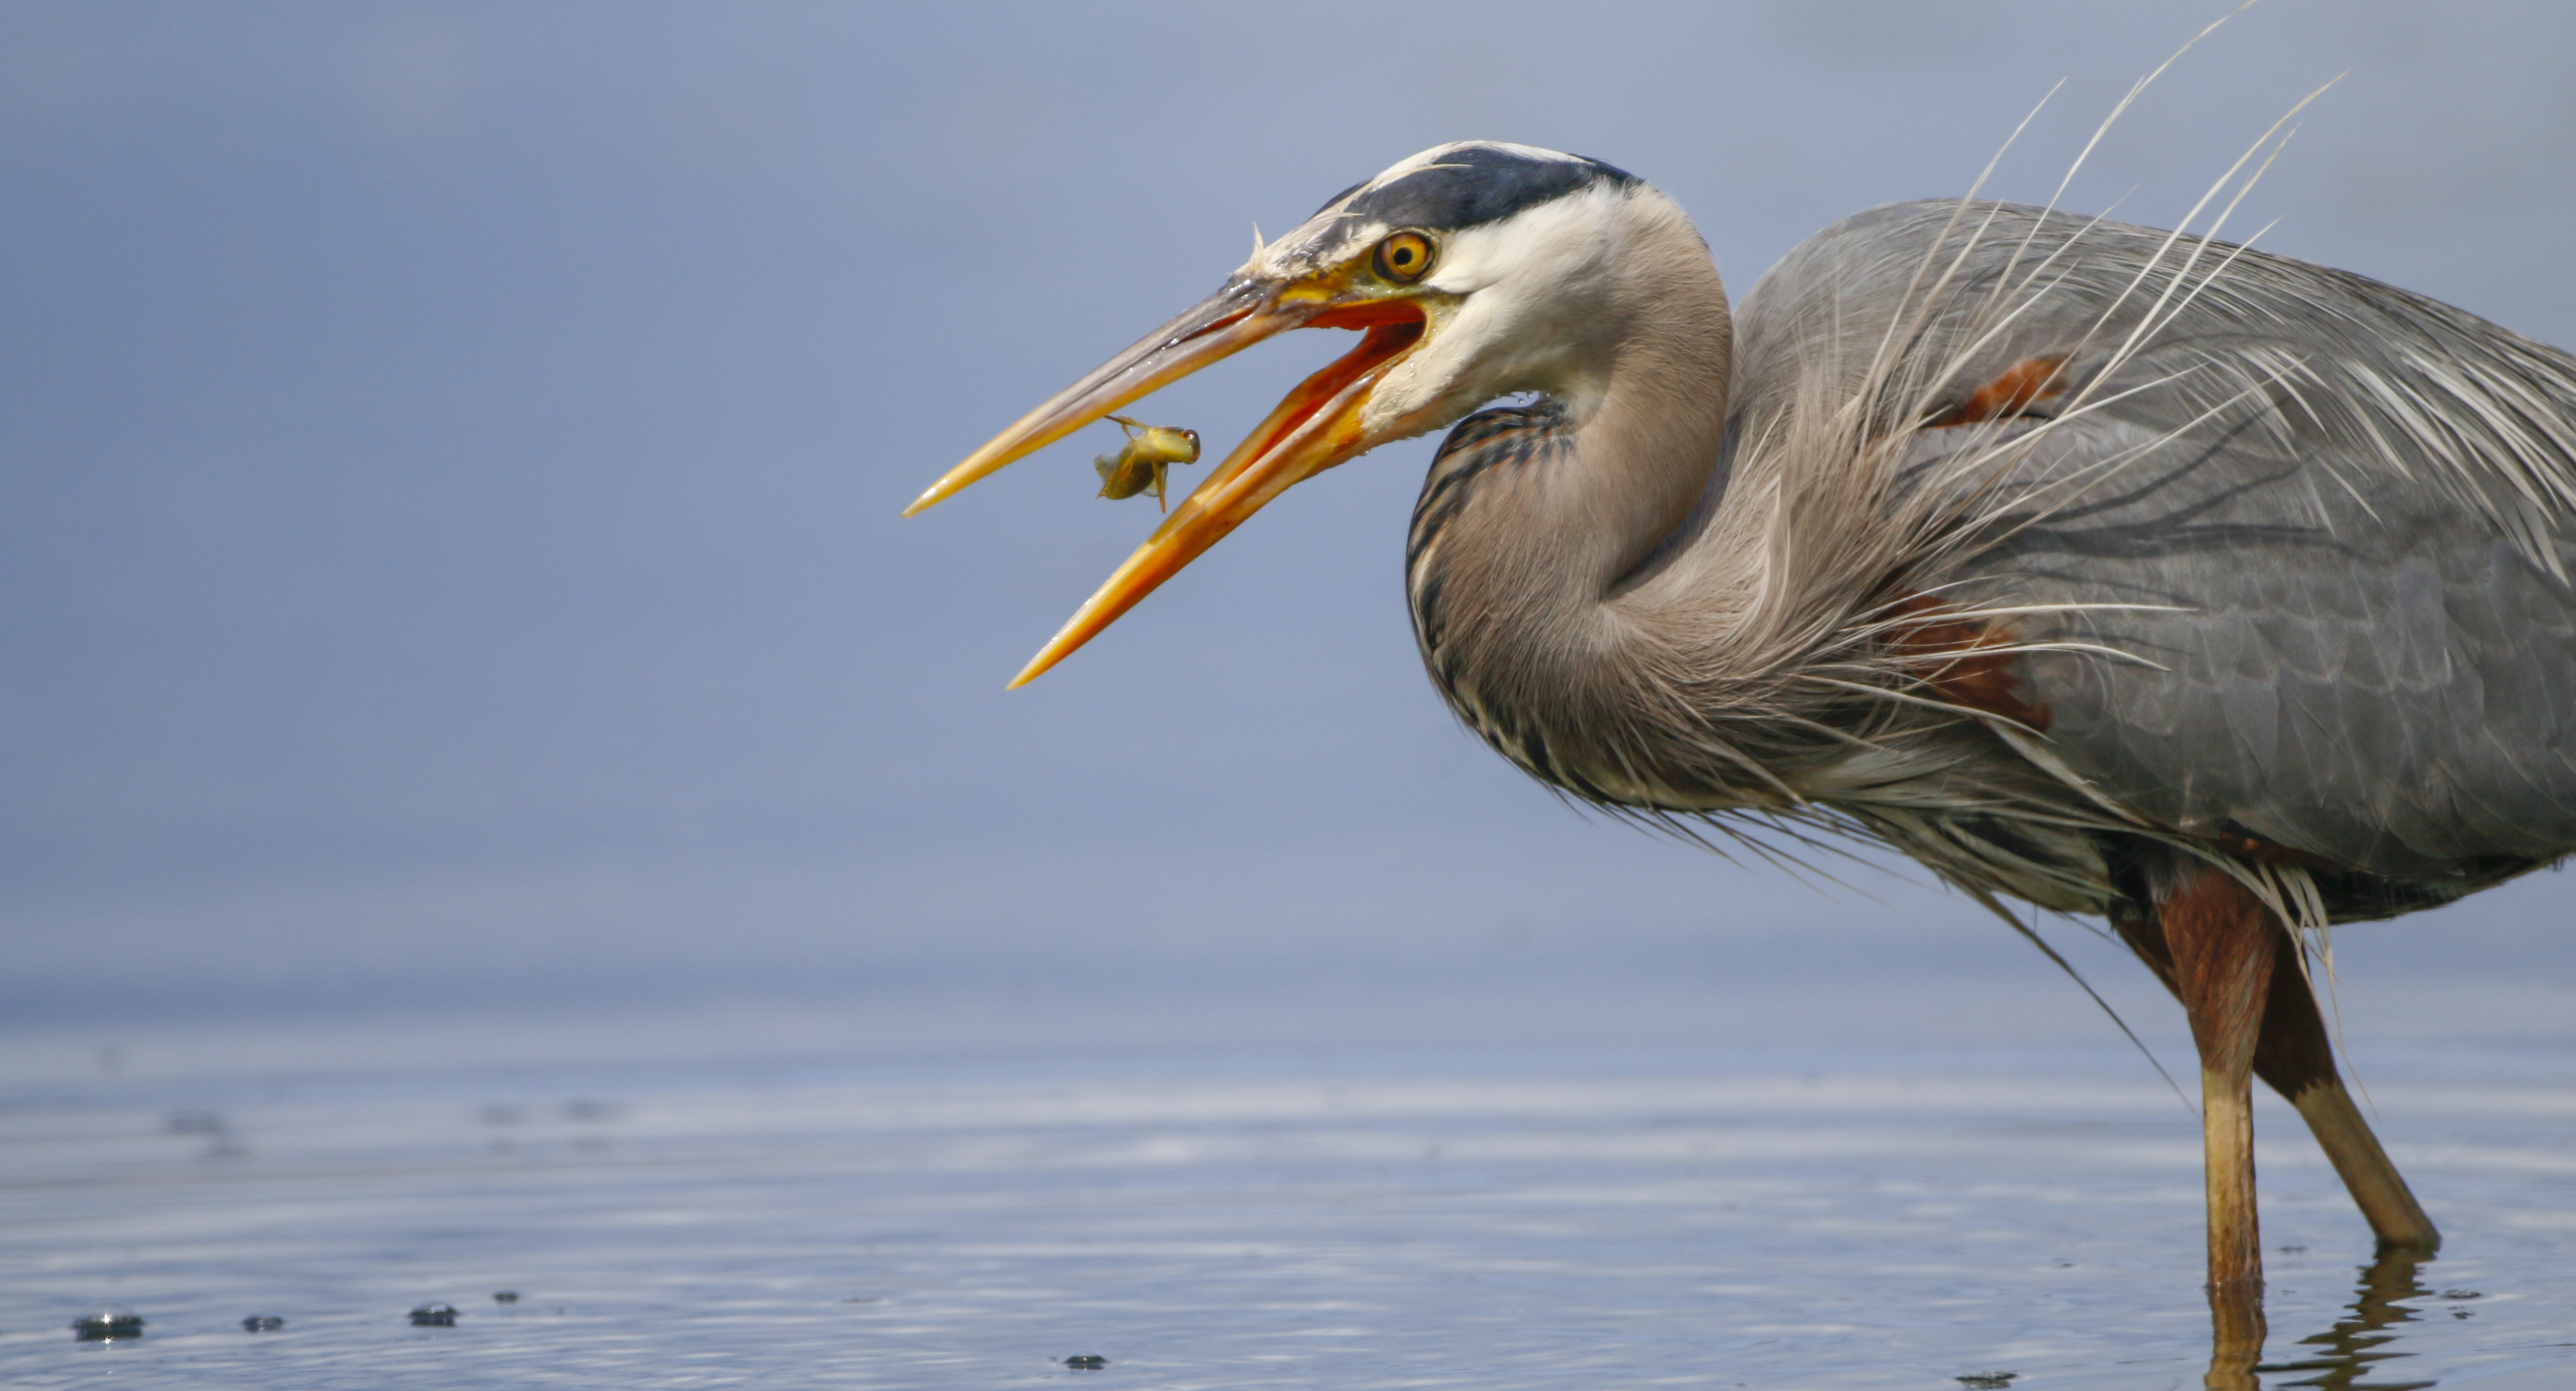 A great blue heron eats a small fish